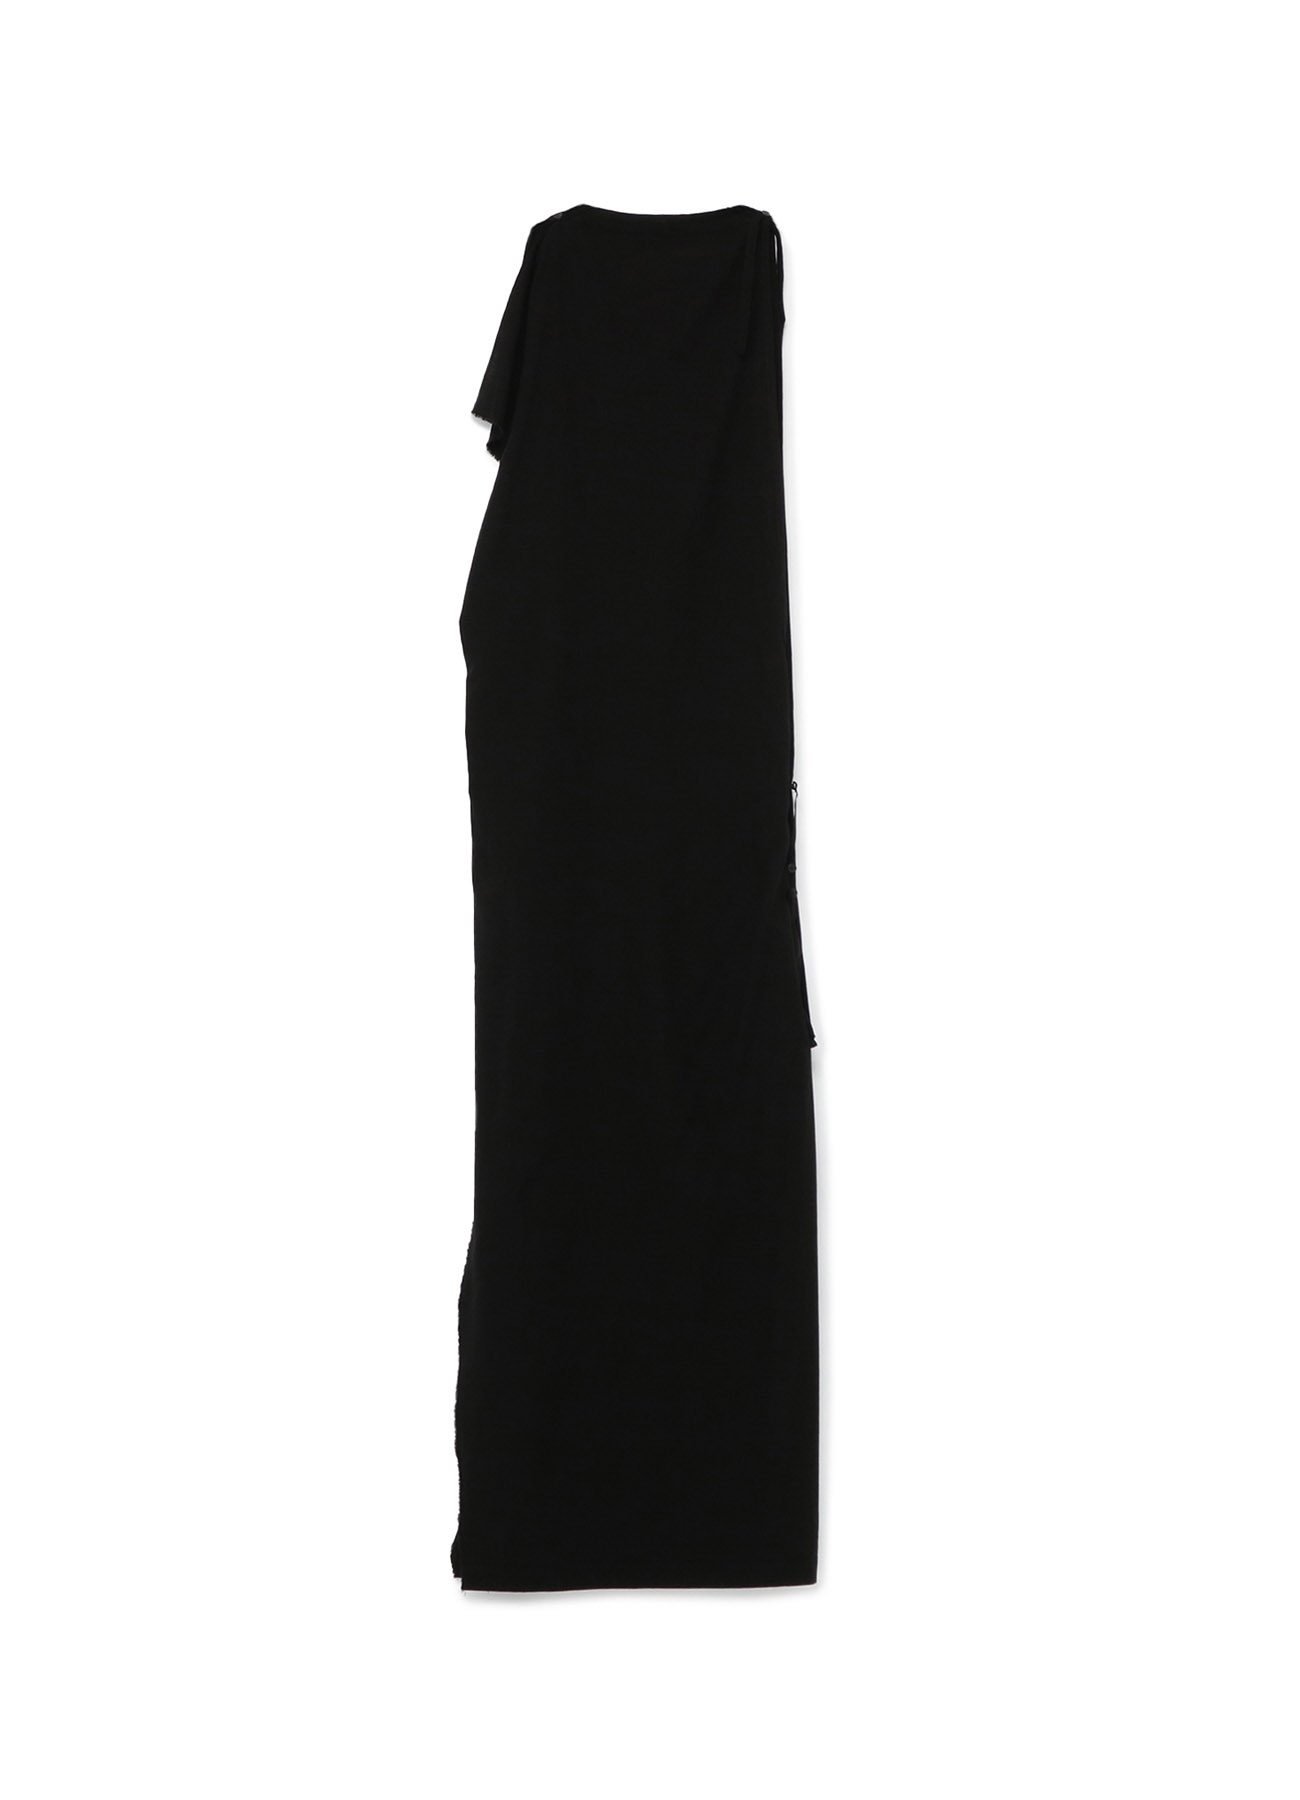 C/Li Calico A Drape Design Dress